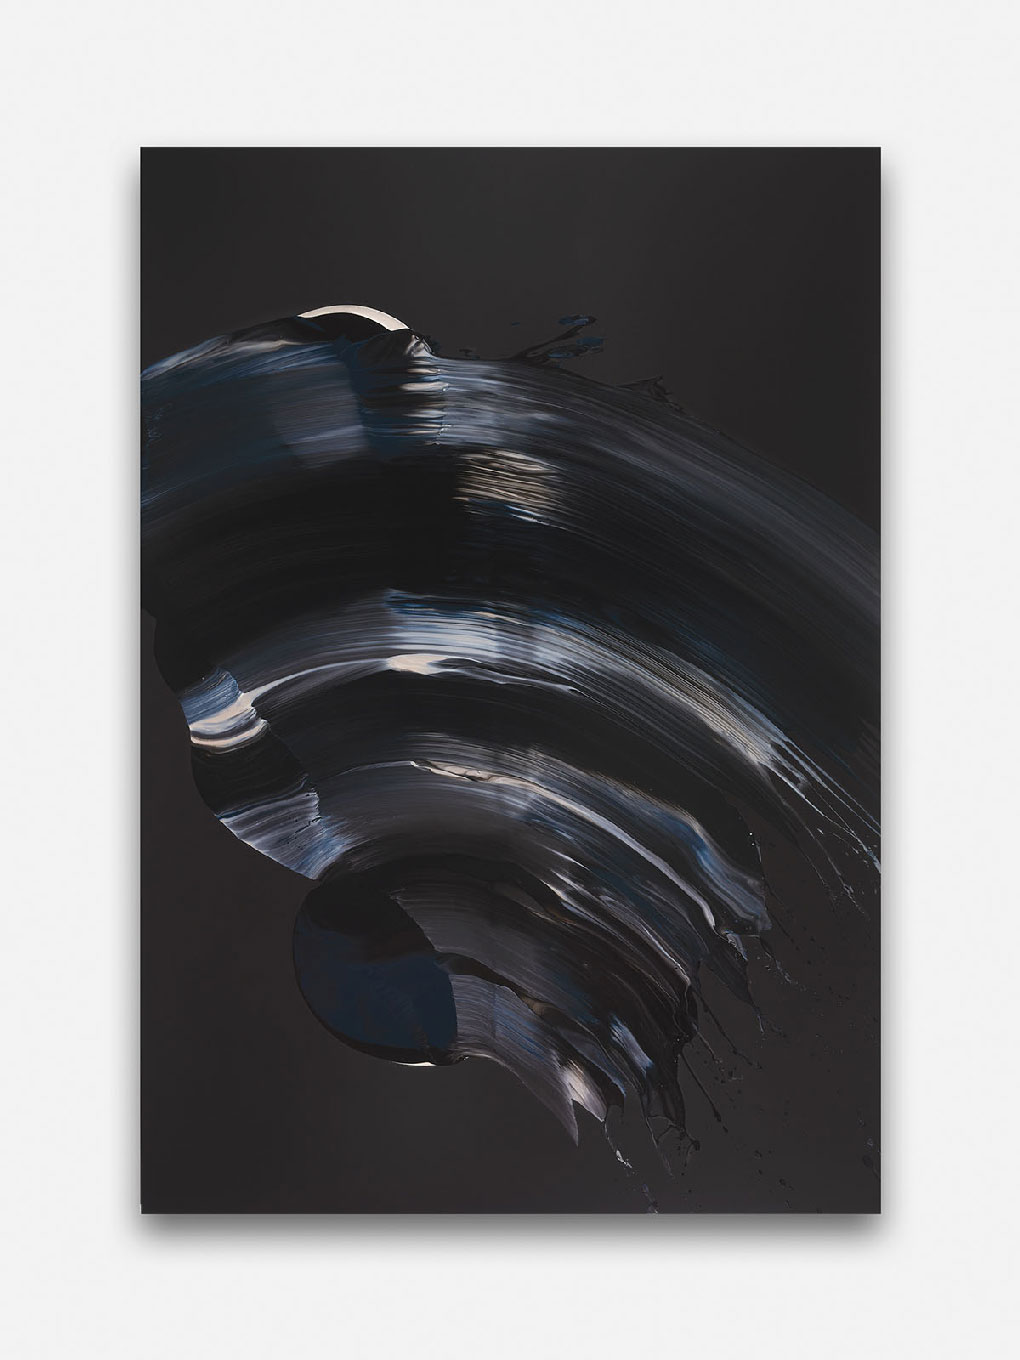 Yago Hortal - SP246. 2019. Acrylic on linen. 260 x 180 cm